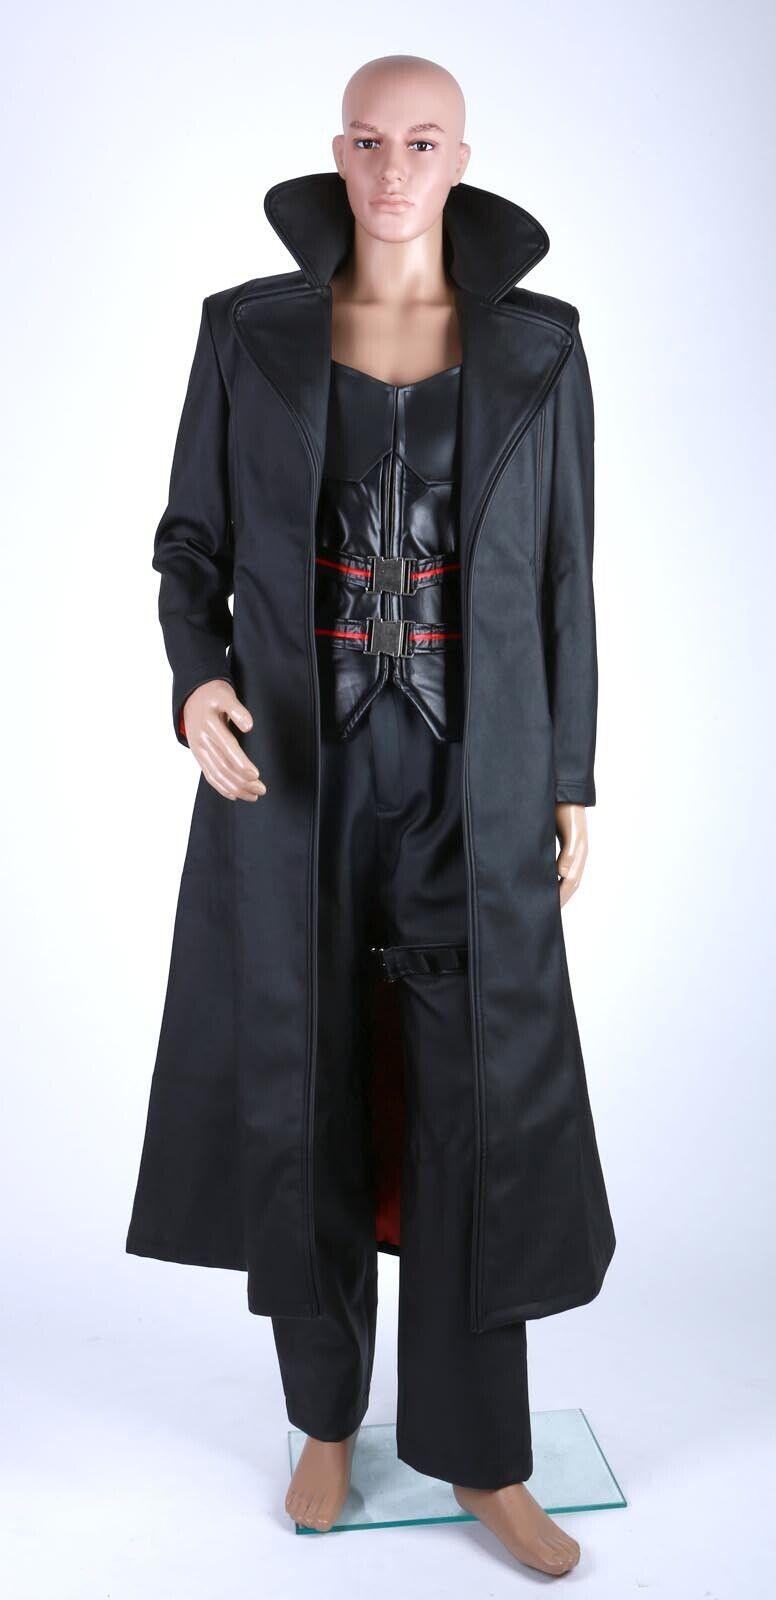 Blade Wesley Snipes Costume Vampire Hunter Halloween Outfit Cosplay Fullset - CrazeCosplay